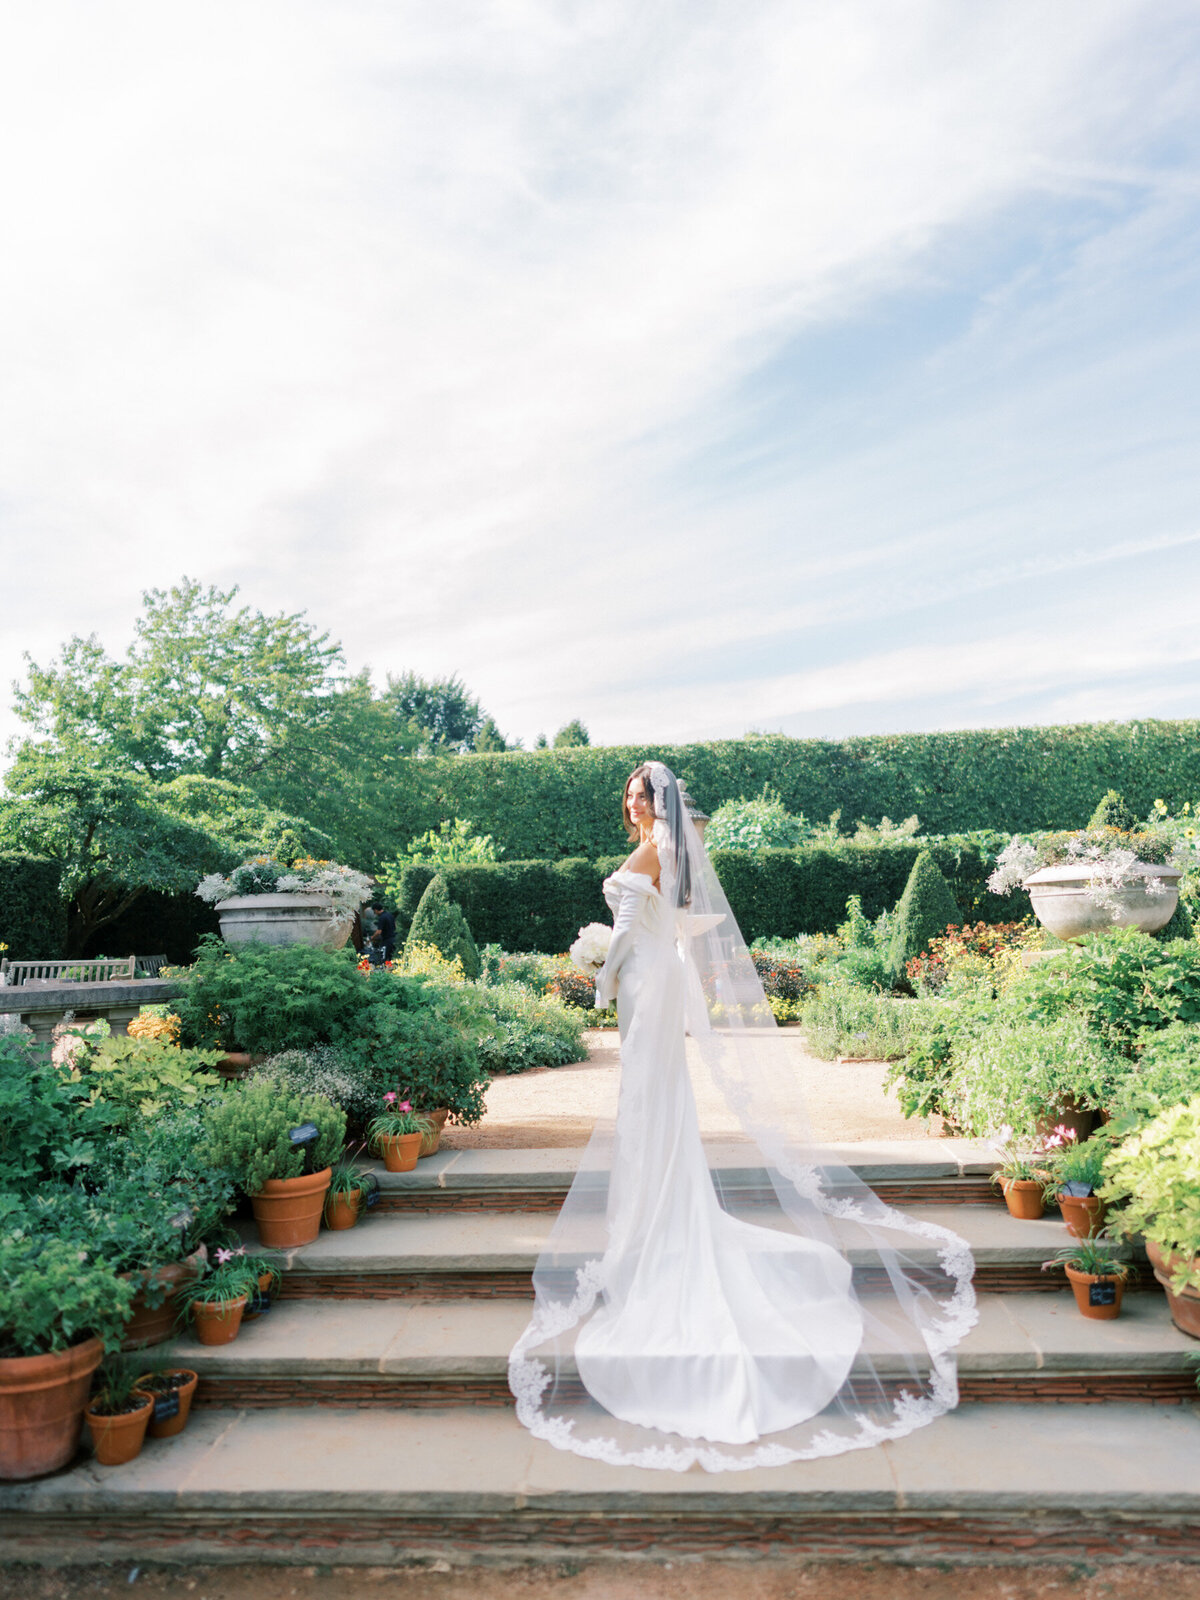 Summer Chicago Botanic Gardens Wedding Highlights | Amarachi Ikeji Photography 85